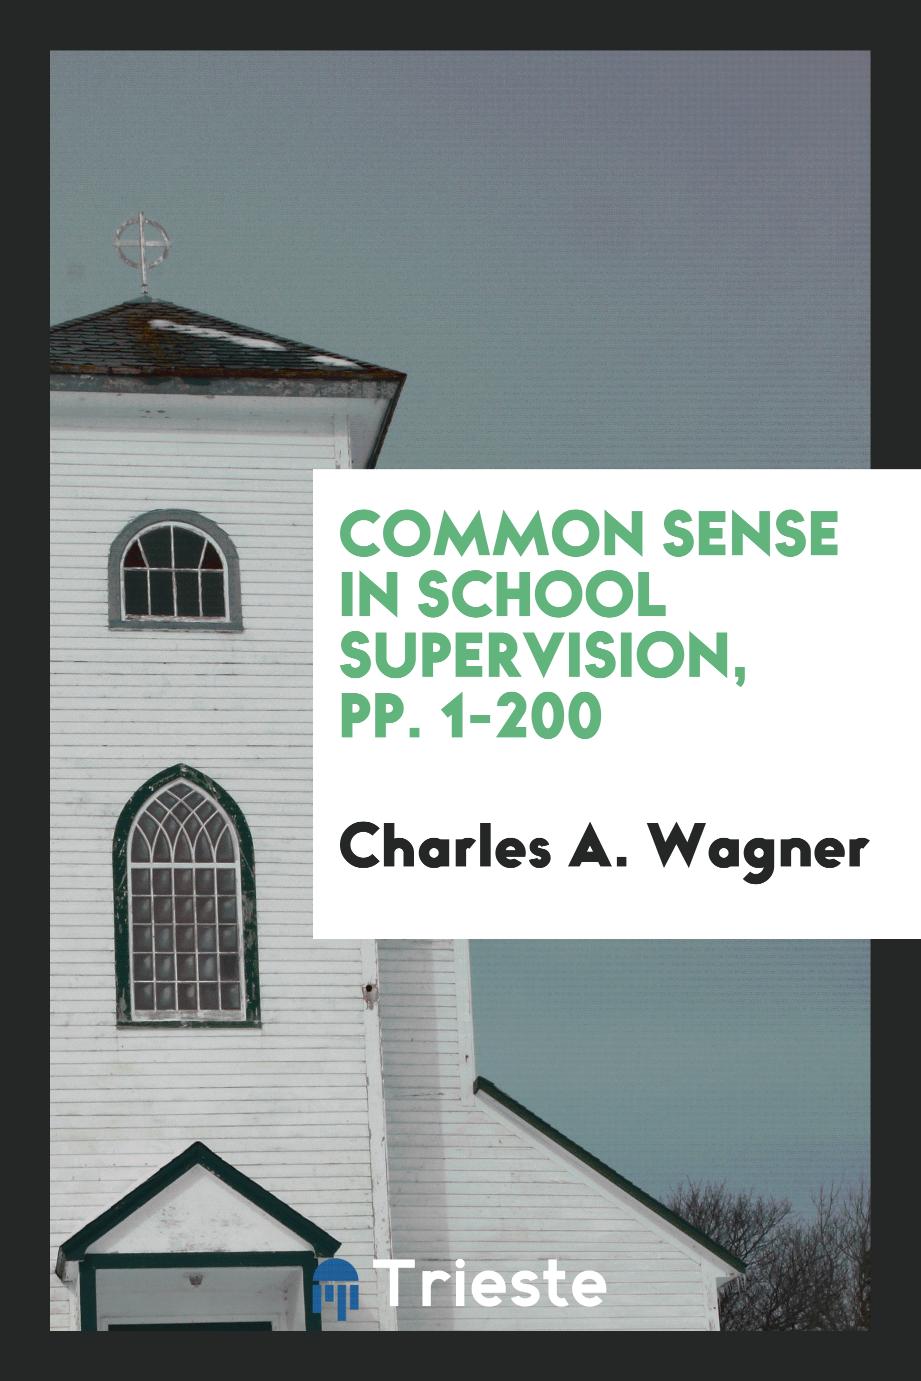 Common Sense in School Supervision, pp. 1-200